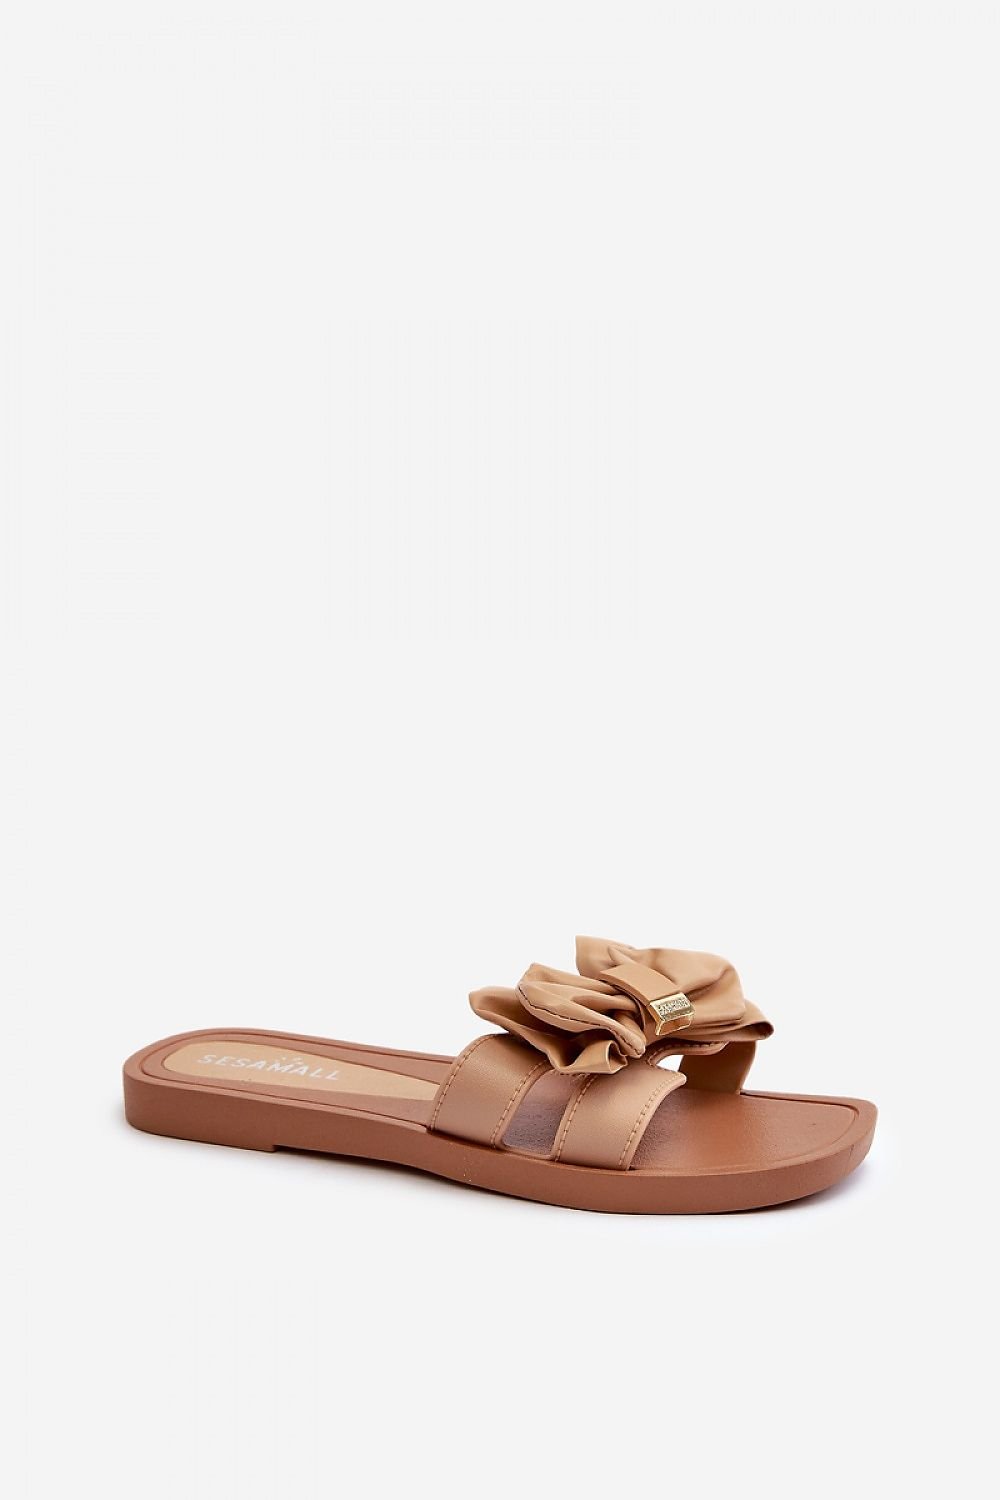 TEEK - Beveled Bow Flat Sandals SHOES TEEK MH brown 6 